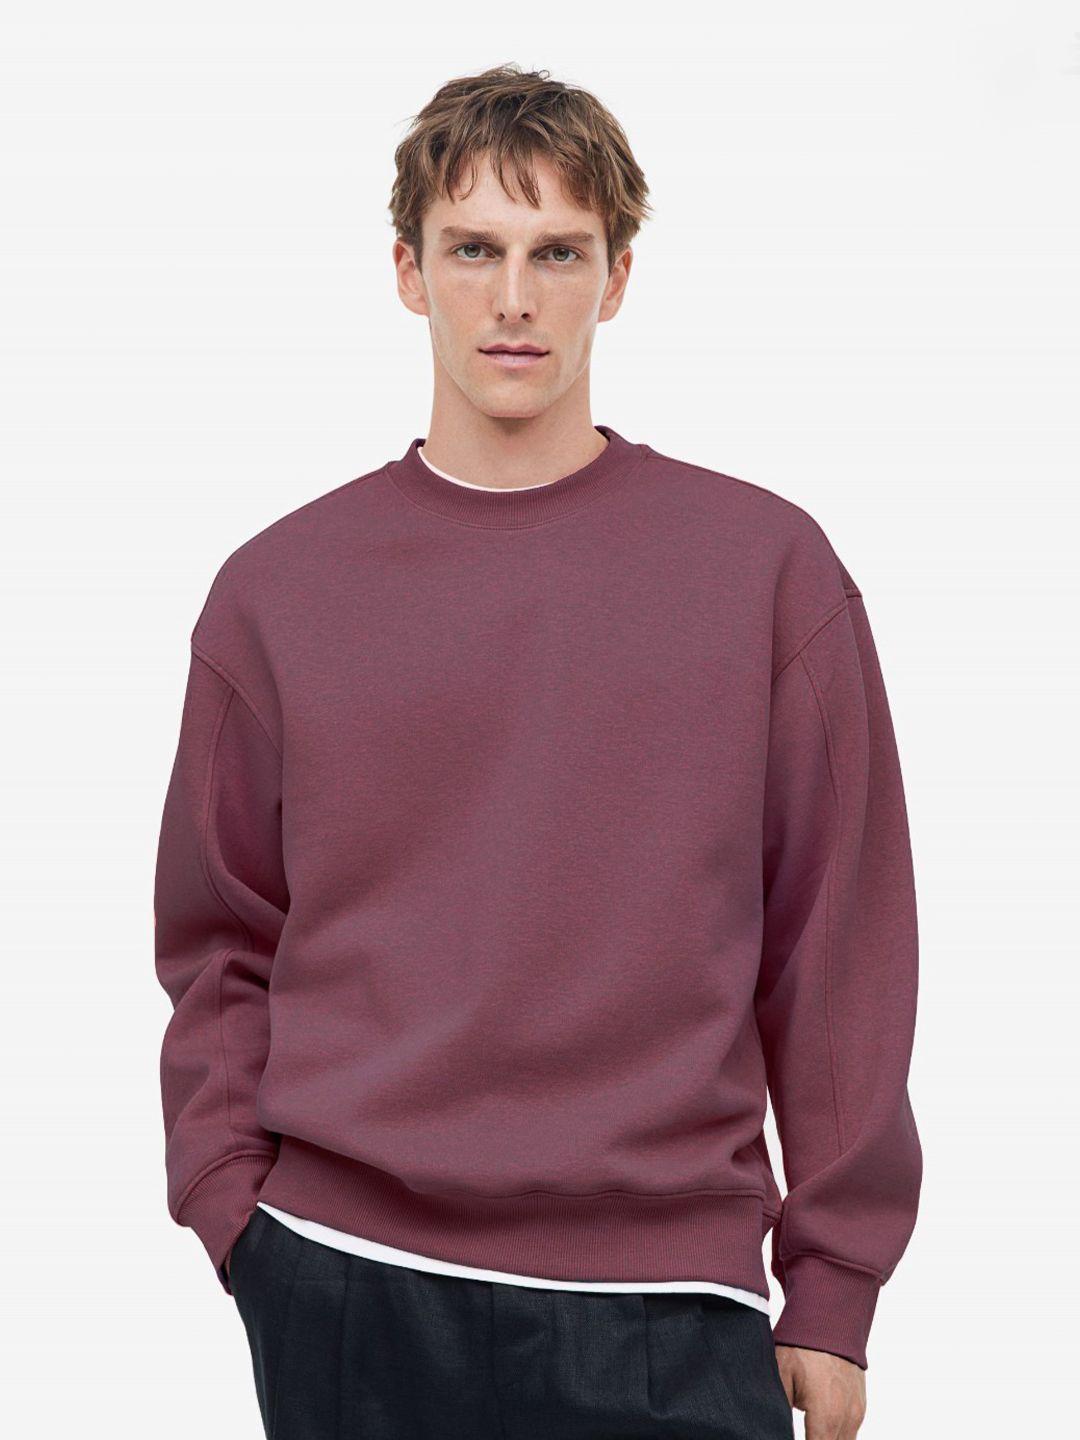 mischief-monkey-round-neck-fleece-oversized-pullover-sweatshirt